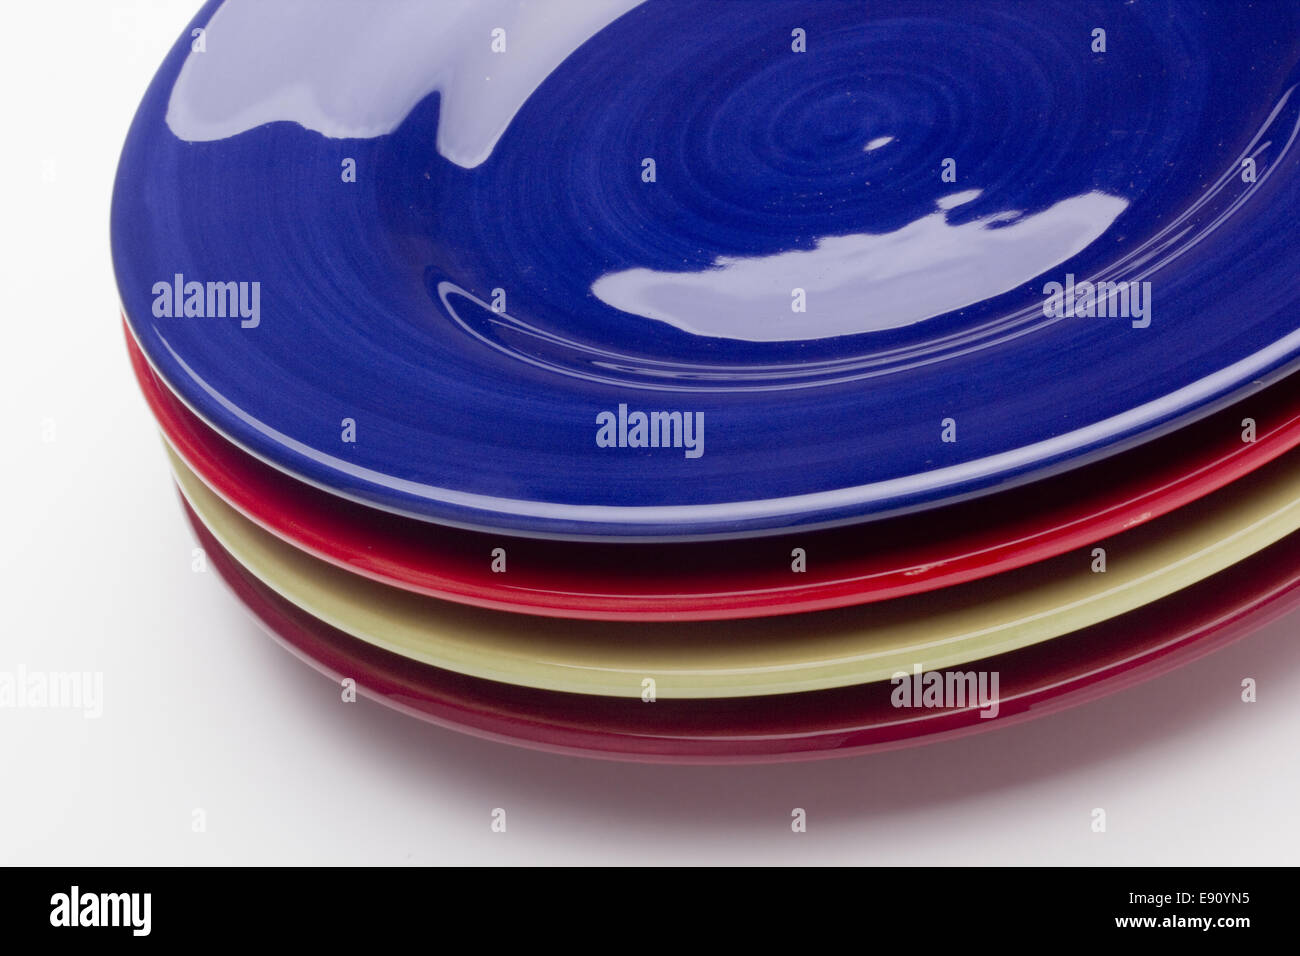 Ceramic plates Stock Photo